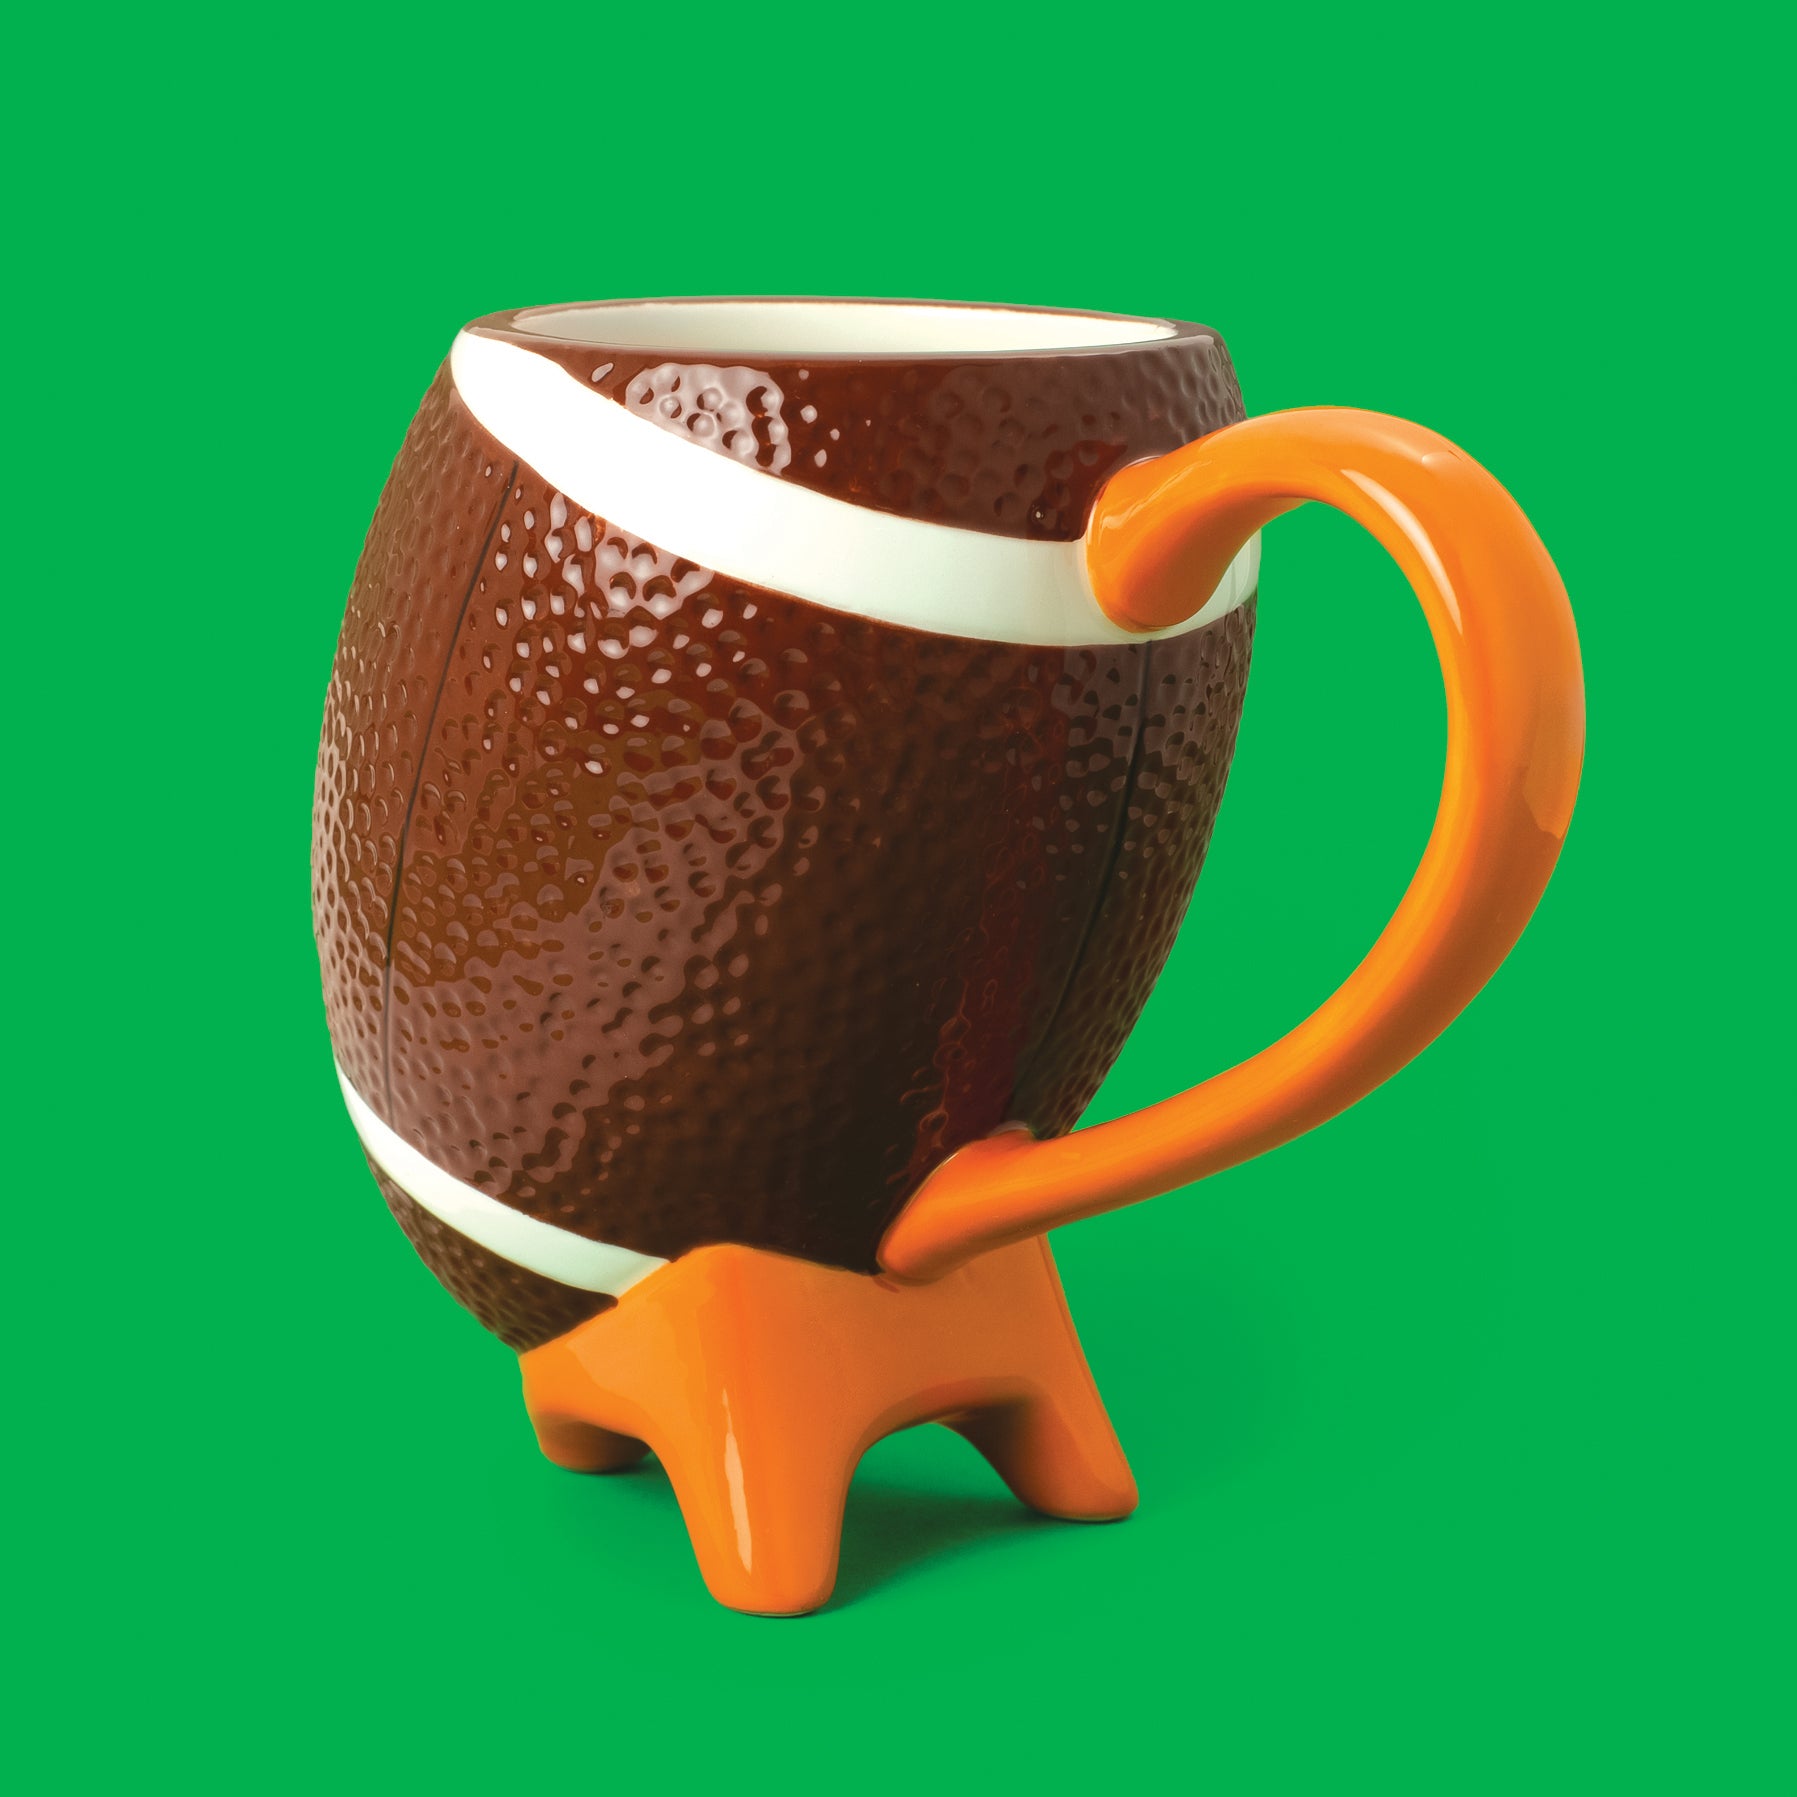 Save the Bra Buddies Coffee Mug  Breast Cancer Awareness Mug or Cup –  Coffee Mugs Never Lie